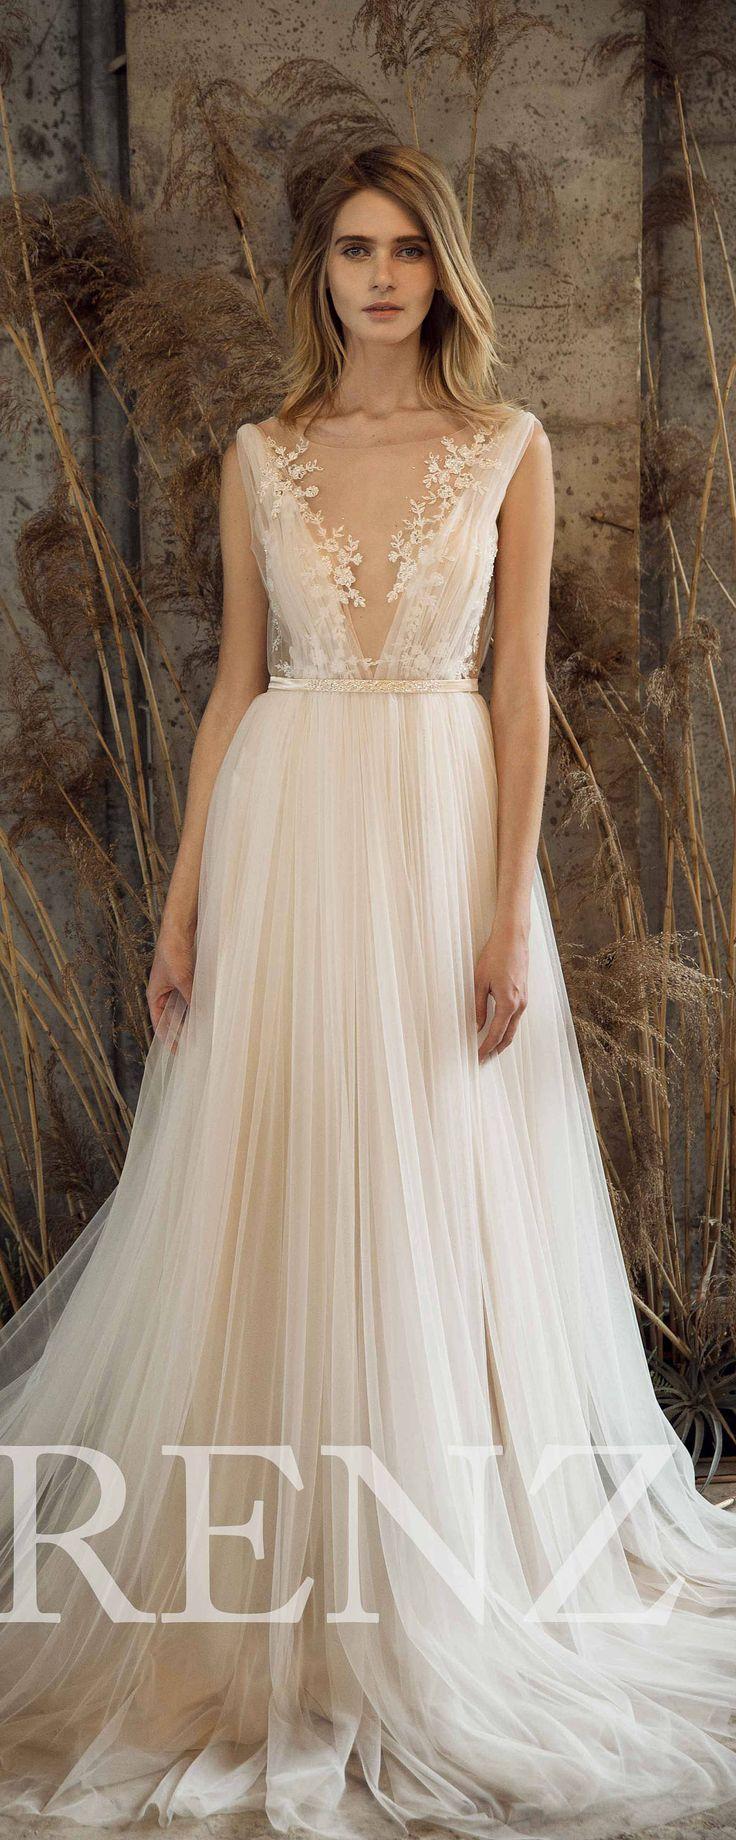 Wedding - Wedding Dress Off White Tulle Dress,V Neck Bridal Dress,Lace Illusion Backless Bride Dress Train Maxi Dress,Sleeveless Evening Dress(LW192)